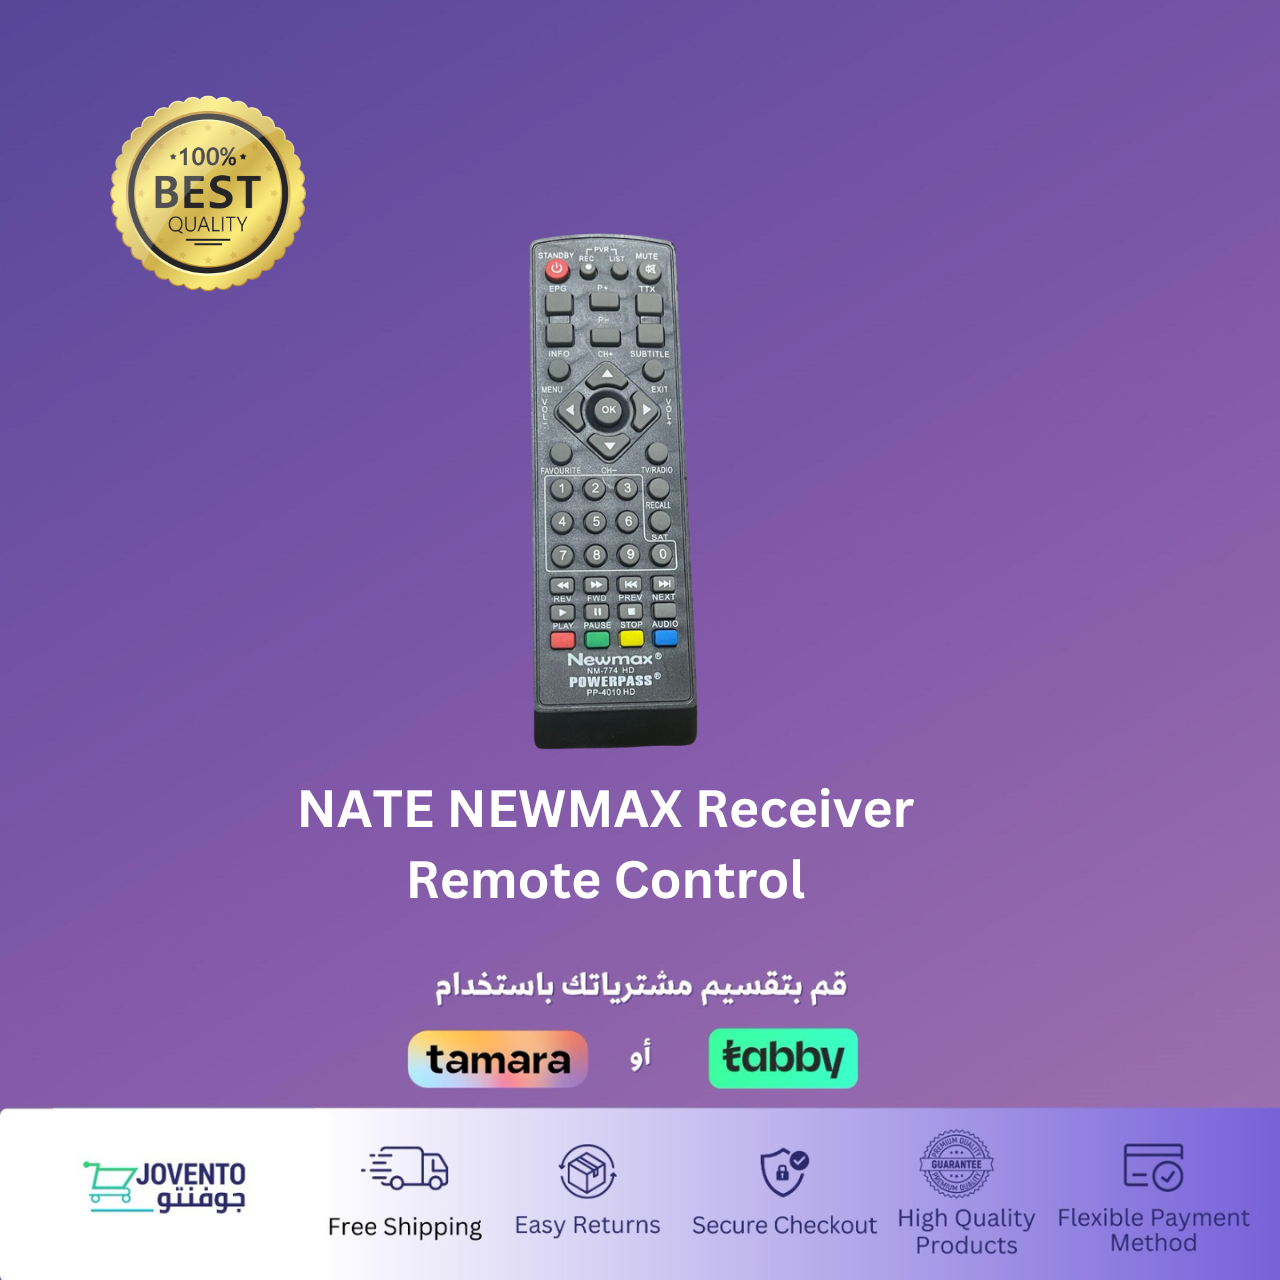 NATE NEWMAX Receiver Remote Control